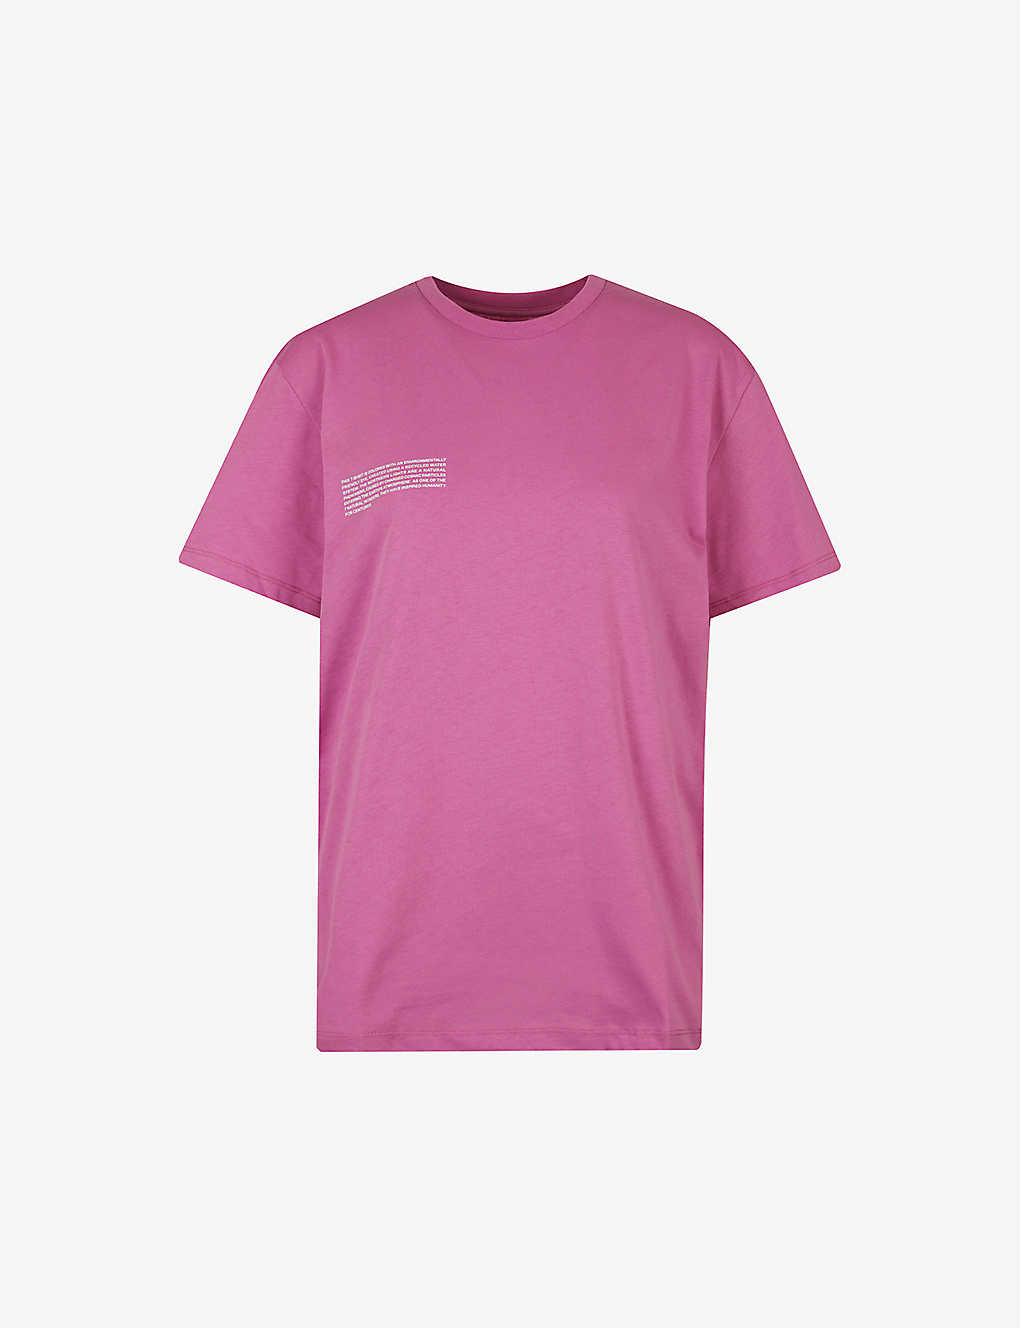 Galaxy Pink T-Shirt